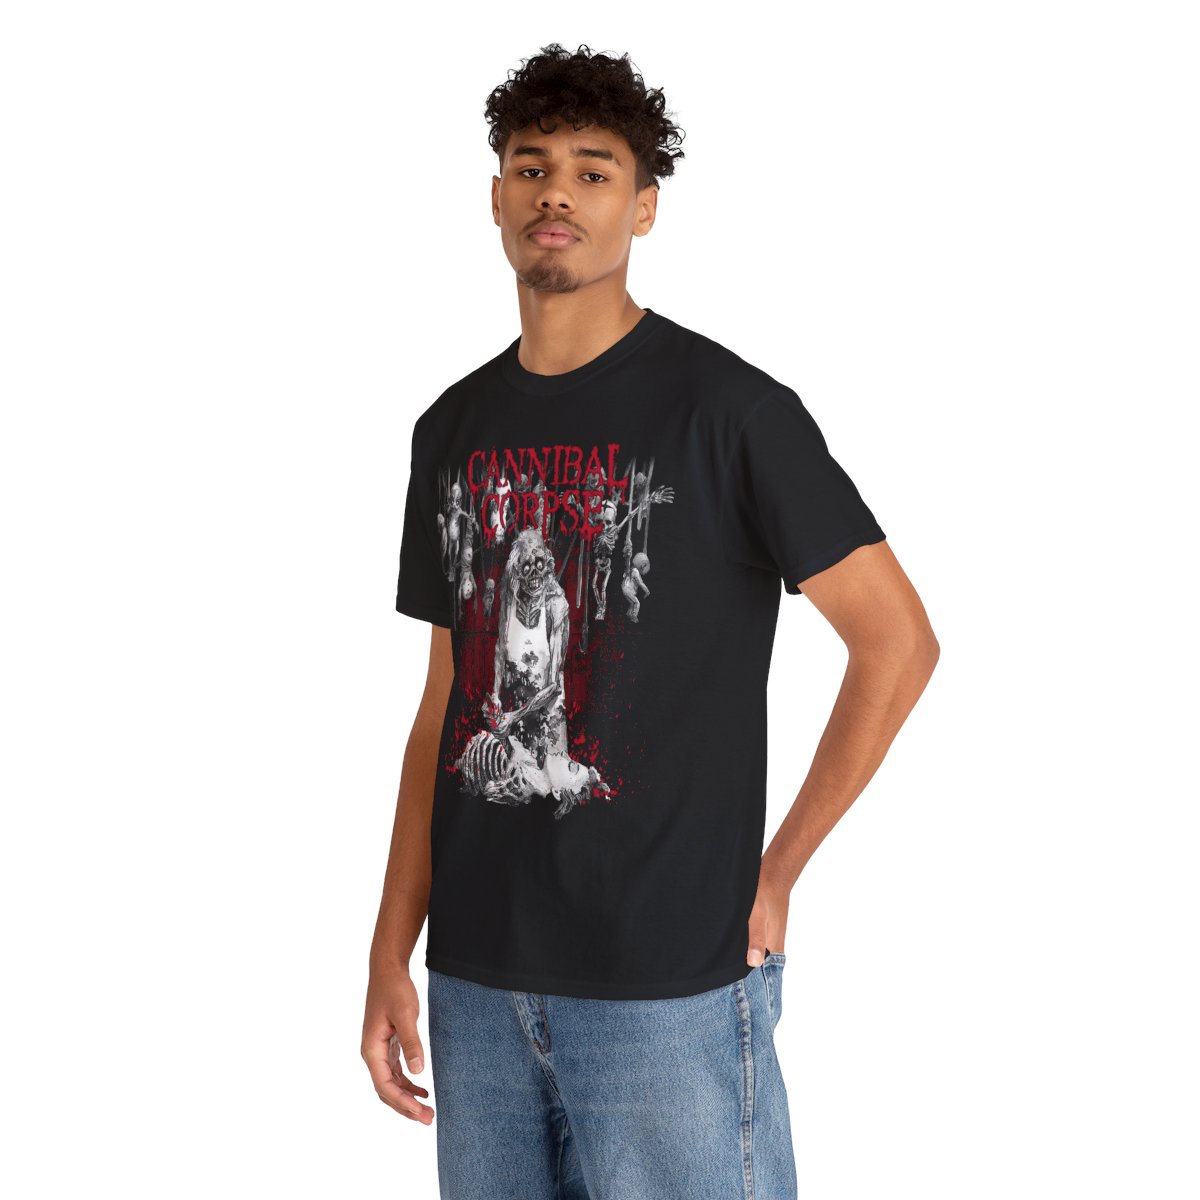 Cannibal Corpse, Butcher, Official Merchandise Graphic T-Shirt